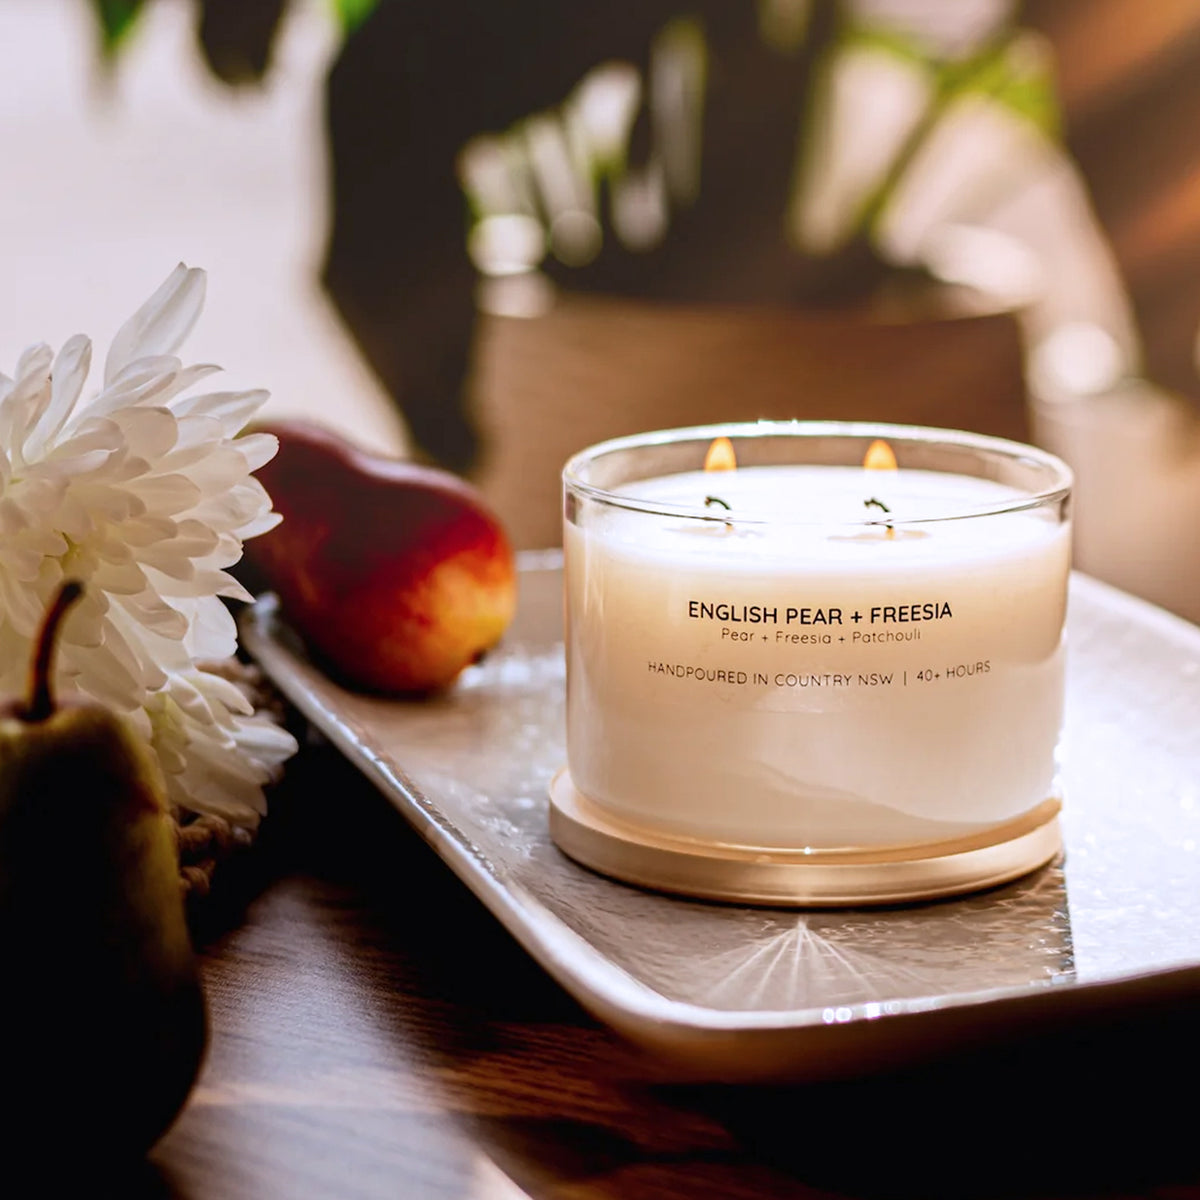 100% Natural Soy Wax "English Pear & Freesia" Candle from Australia (330g) - Horizon Farms